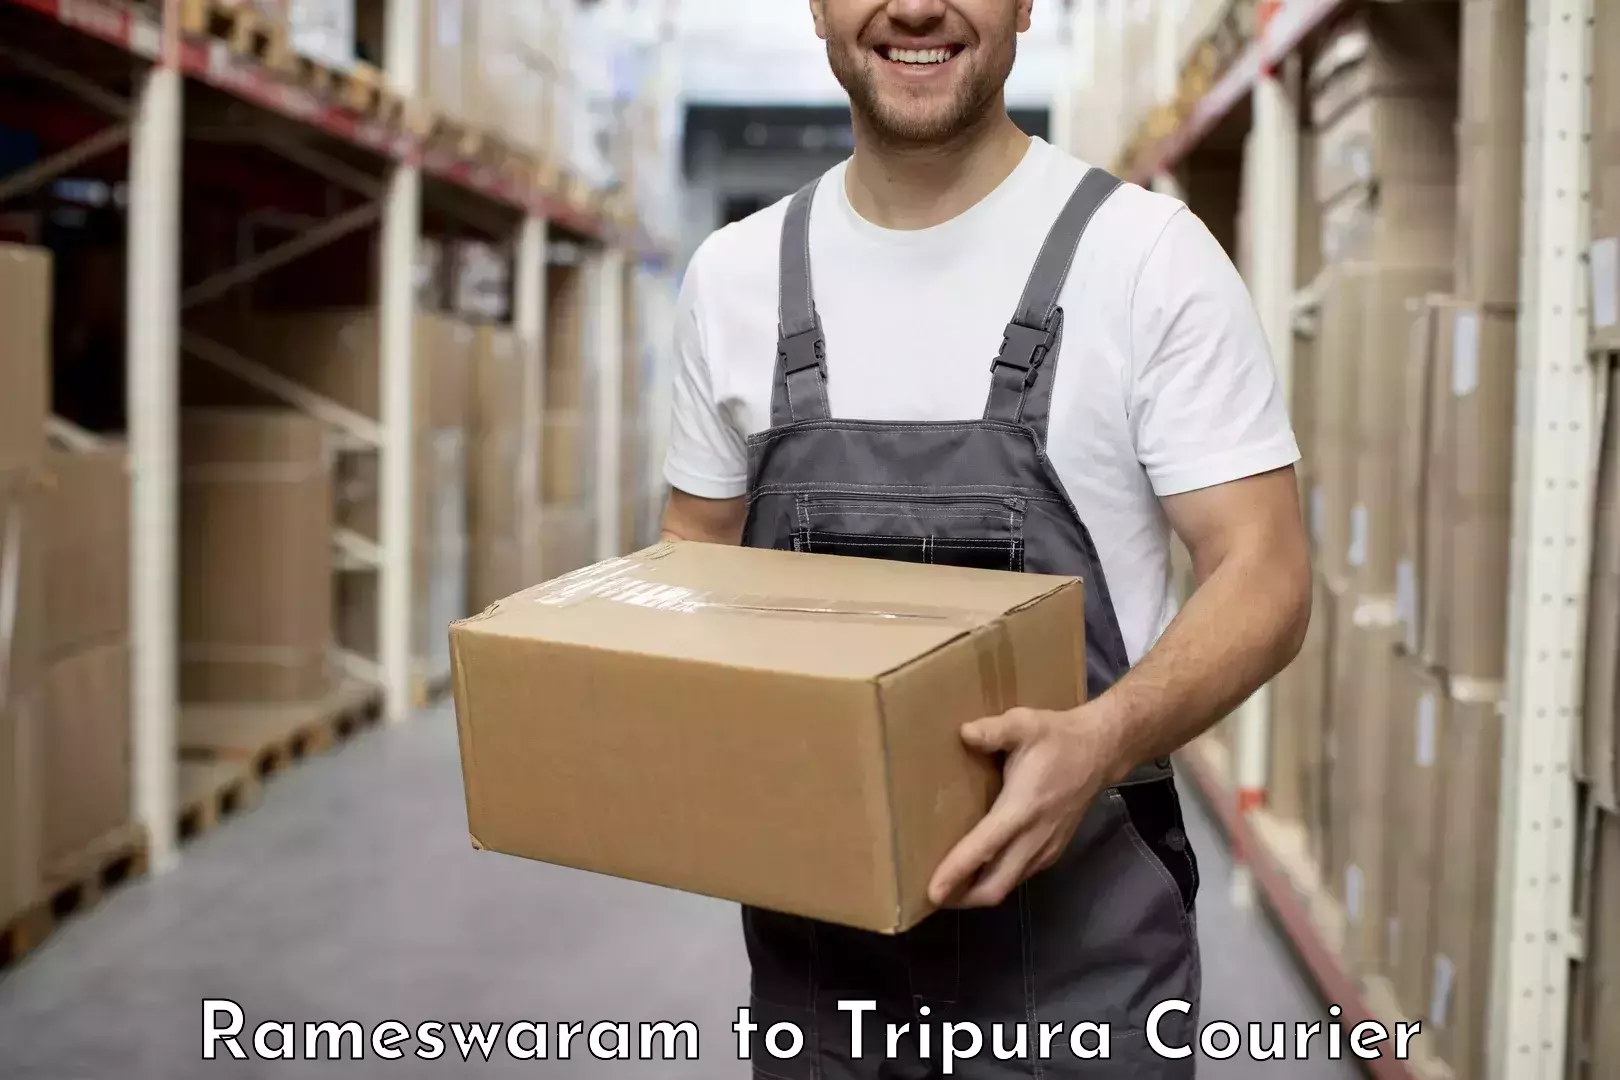 Urgent courier needs Rameswaram to Udaipur Tripura